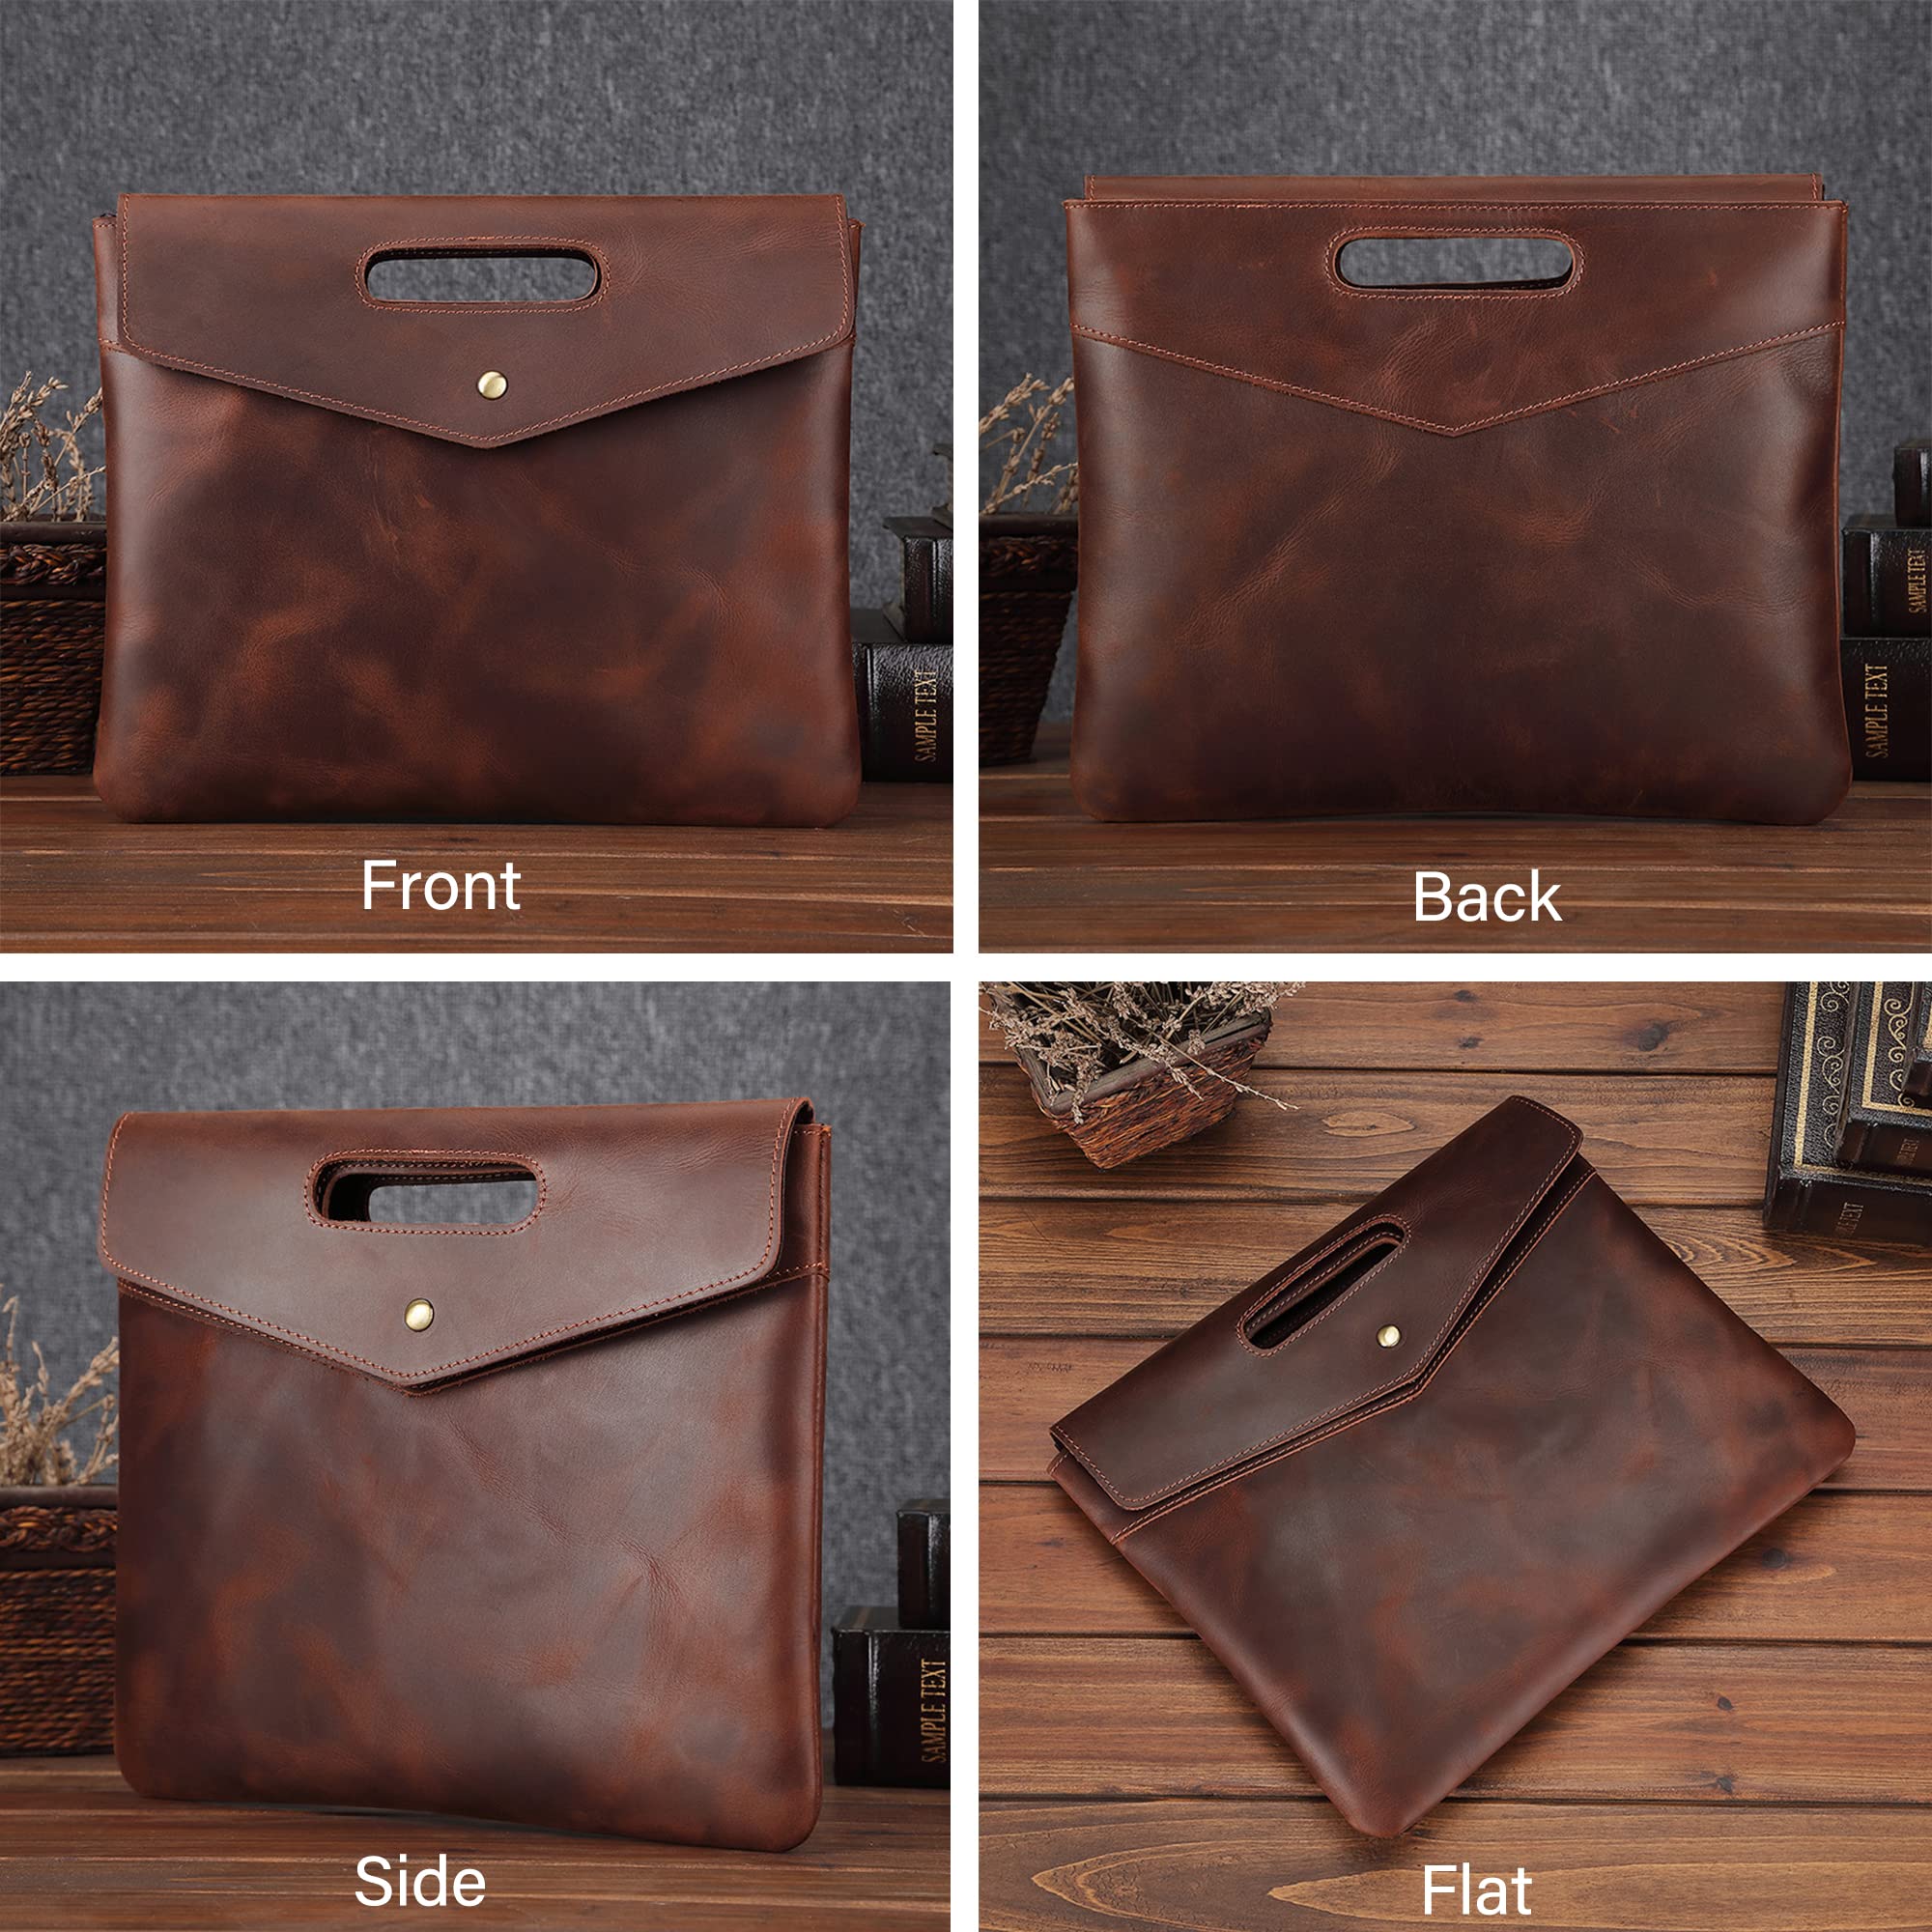 Leather Men's Briefcase Clutch Bag, Retro Business Envelope Bag, Men's Bag for Mac Book Air/Pro & Tablet, Document Bag